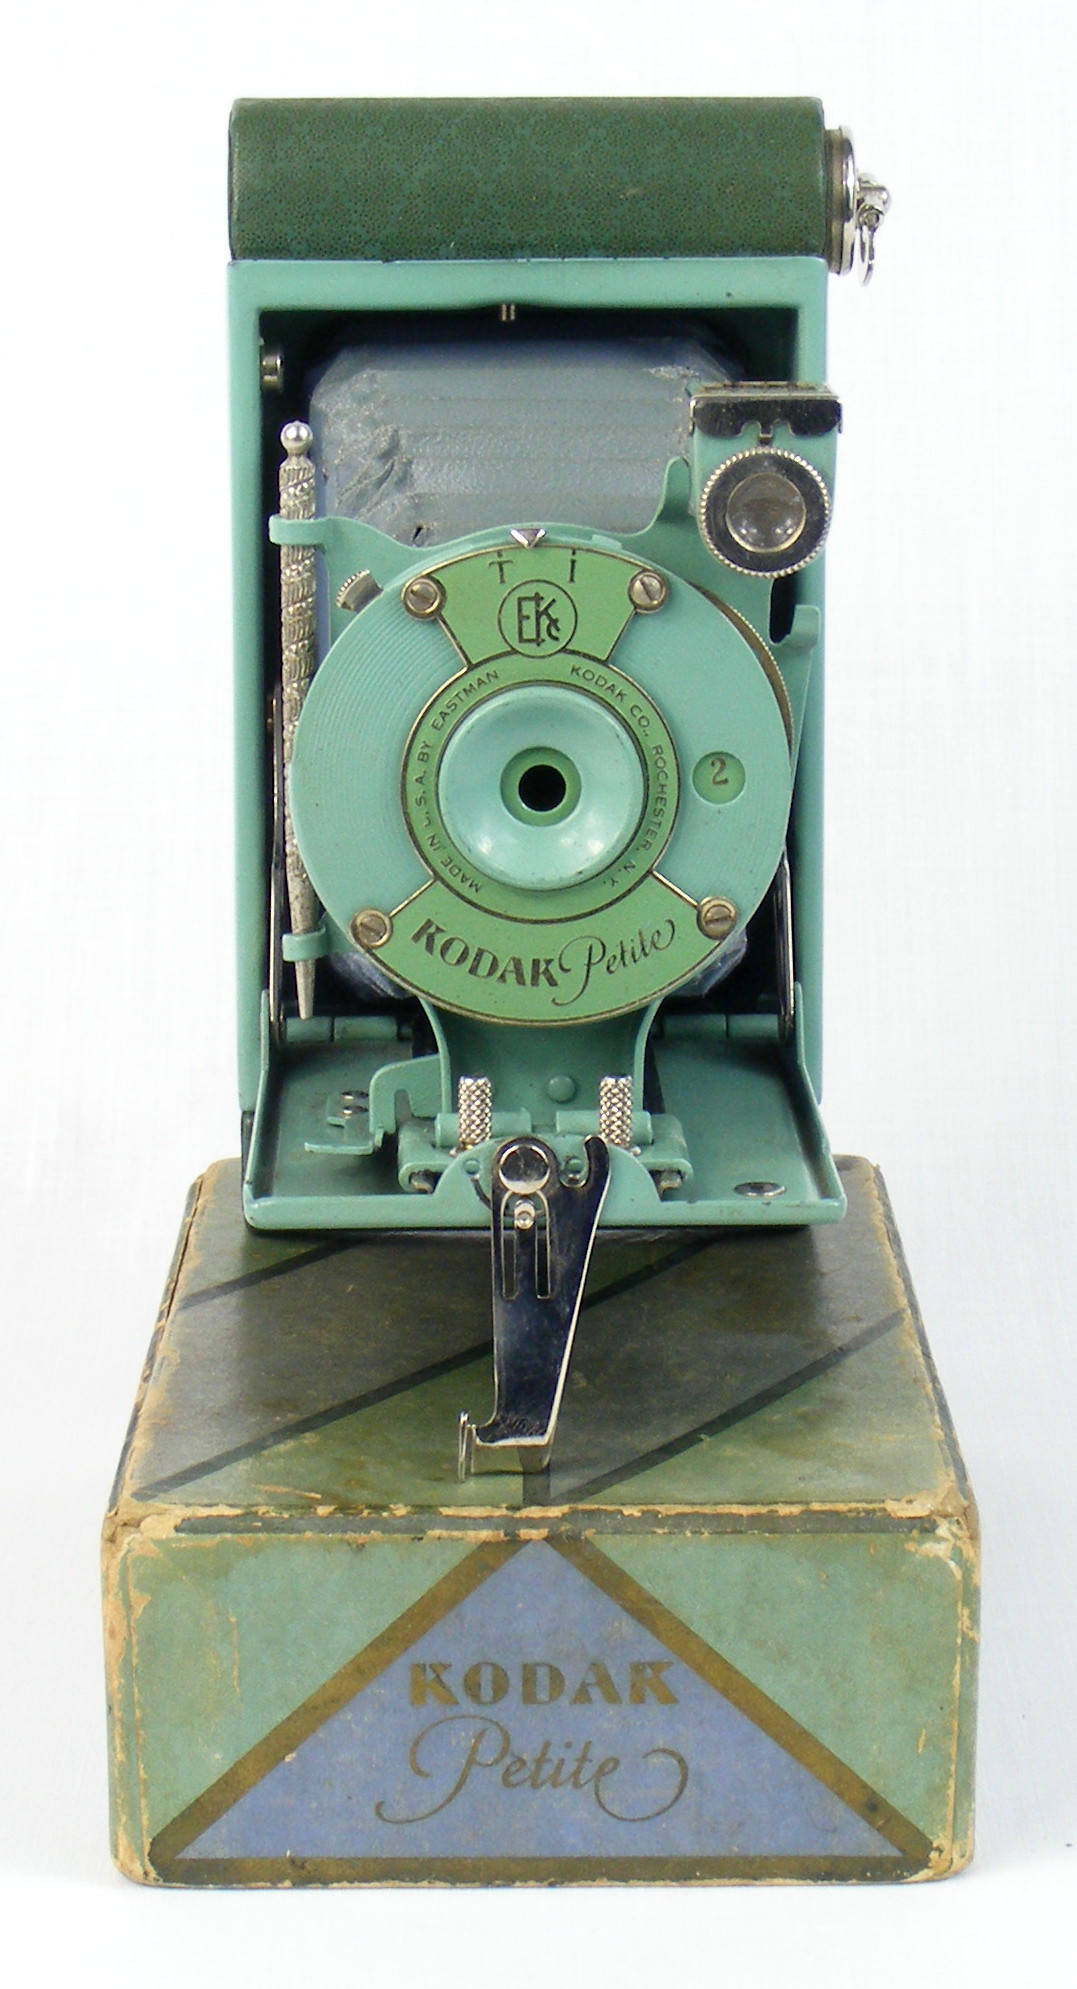 Image of Kodak Petite folding camera in Blue with box